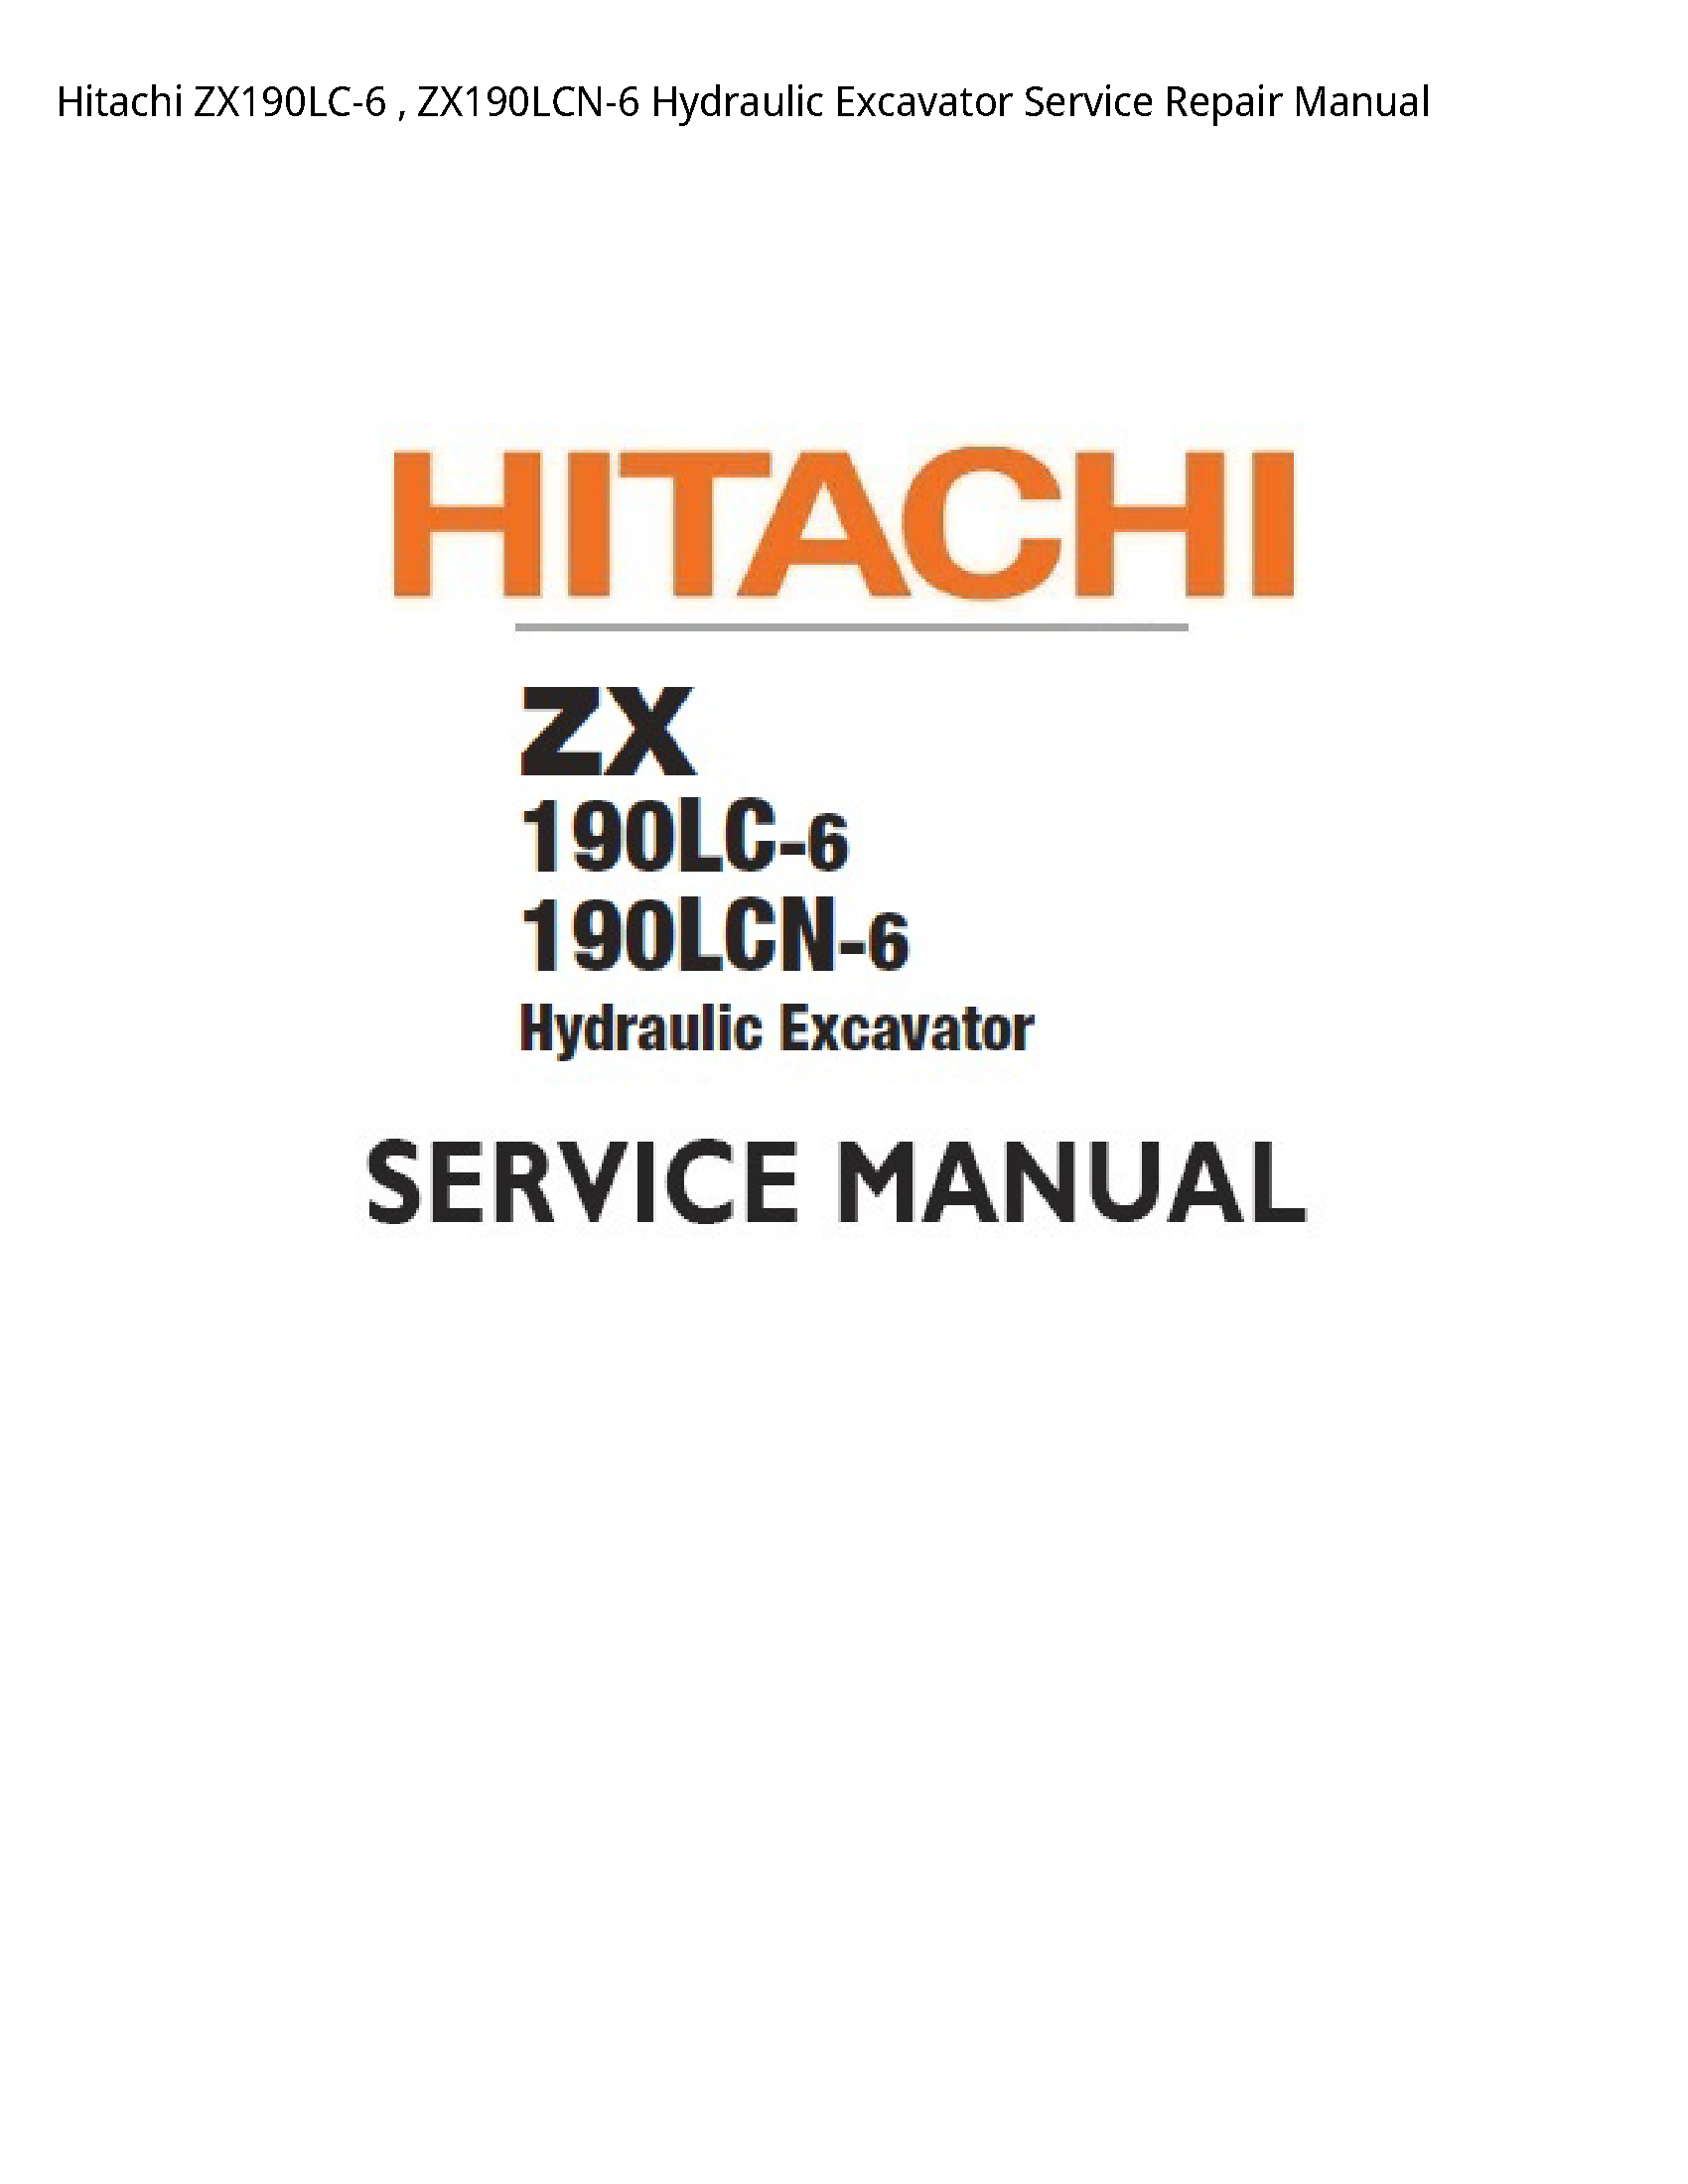 Hitachi ZX190LC-6 Hydraulic Excavator manual